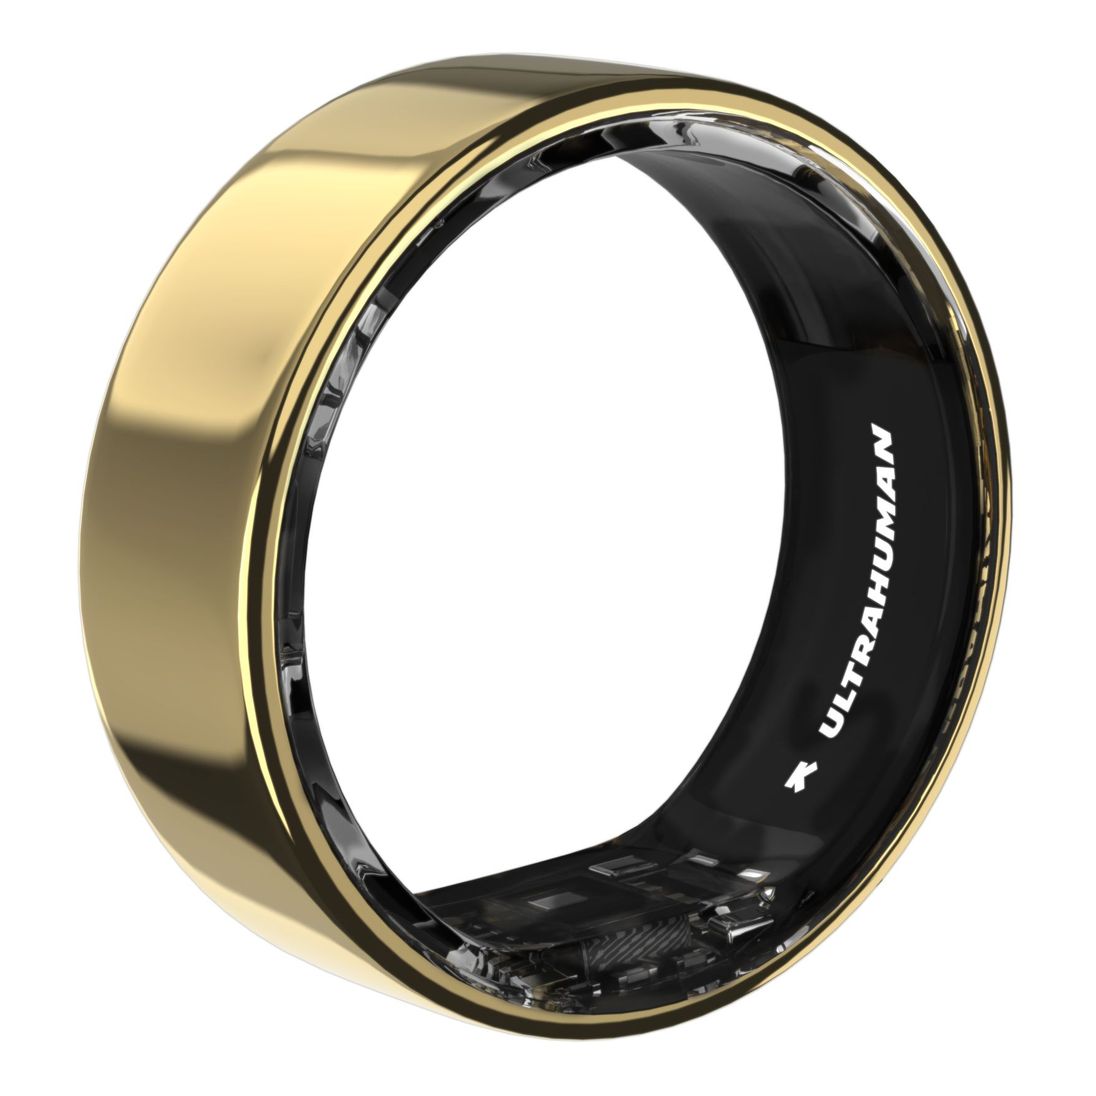 Ultrahuman Ring AIR Smart Ring - Size 6 - Bionic Gold